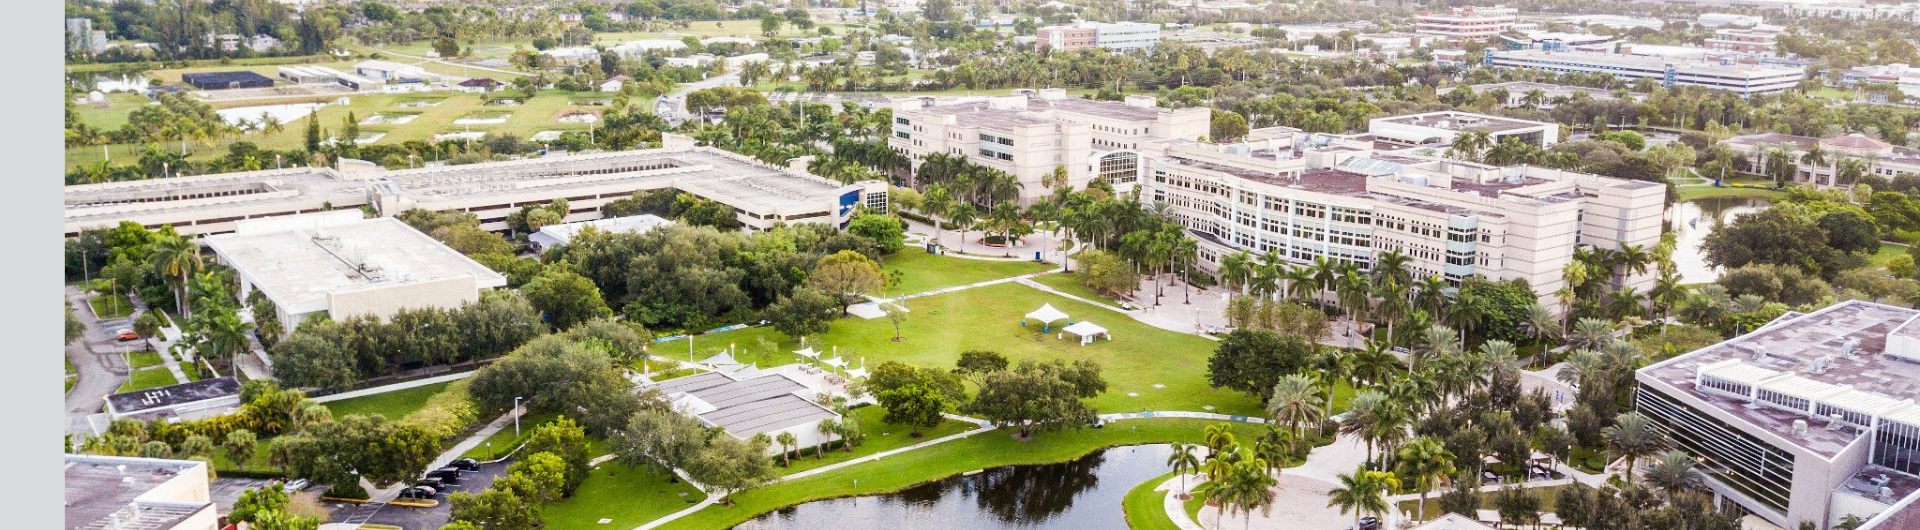 aerial view of Nova Southeastern University